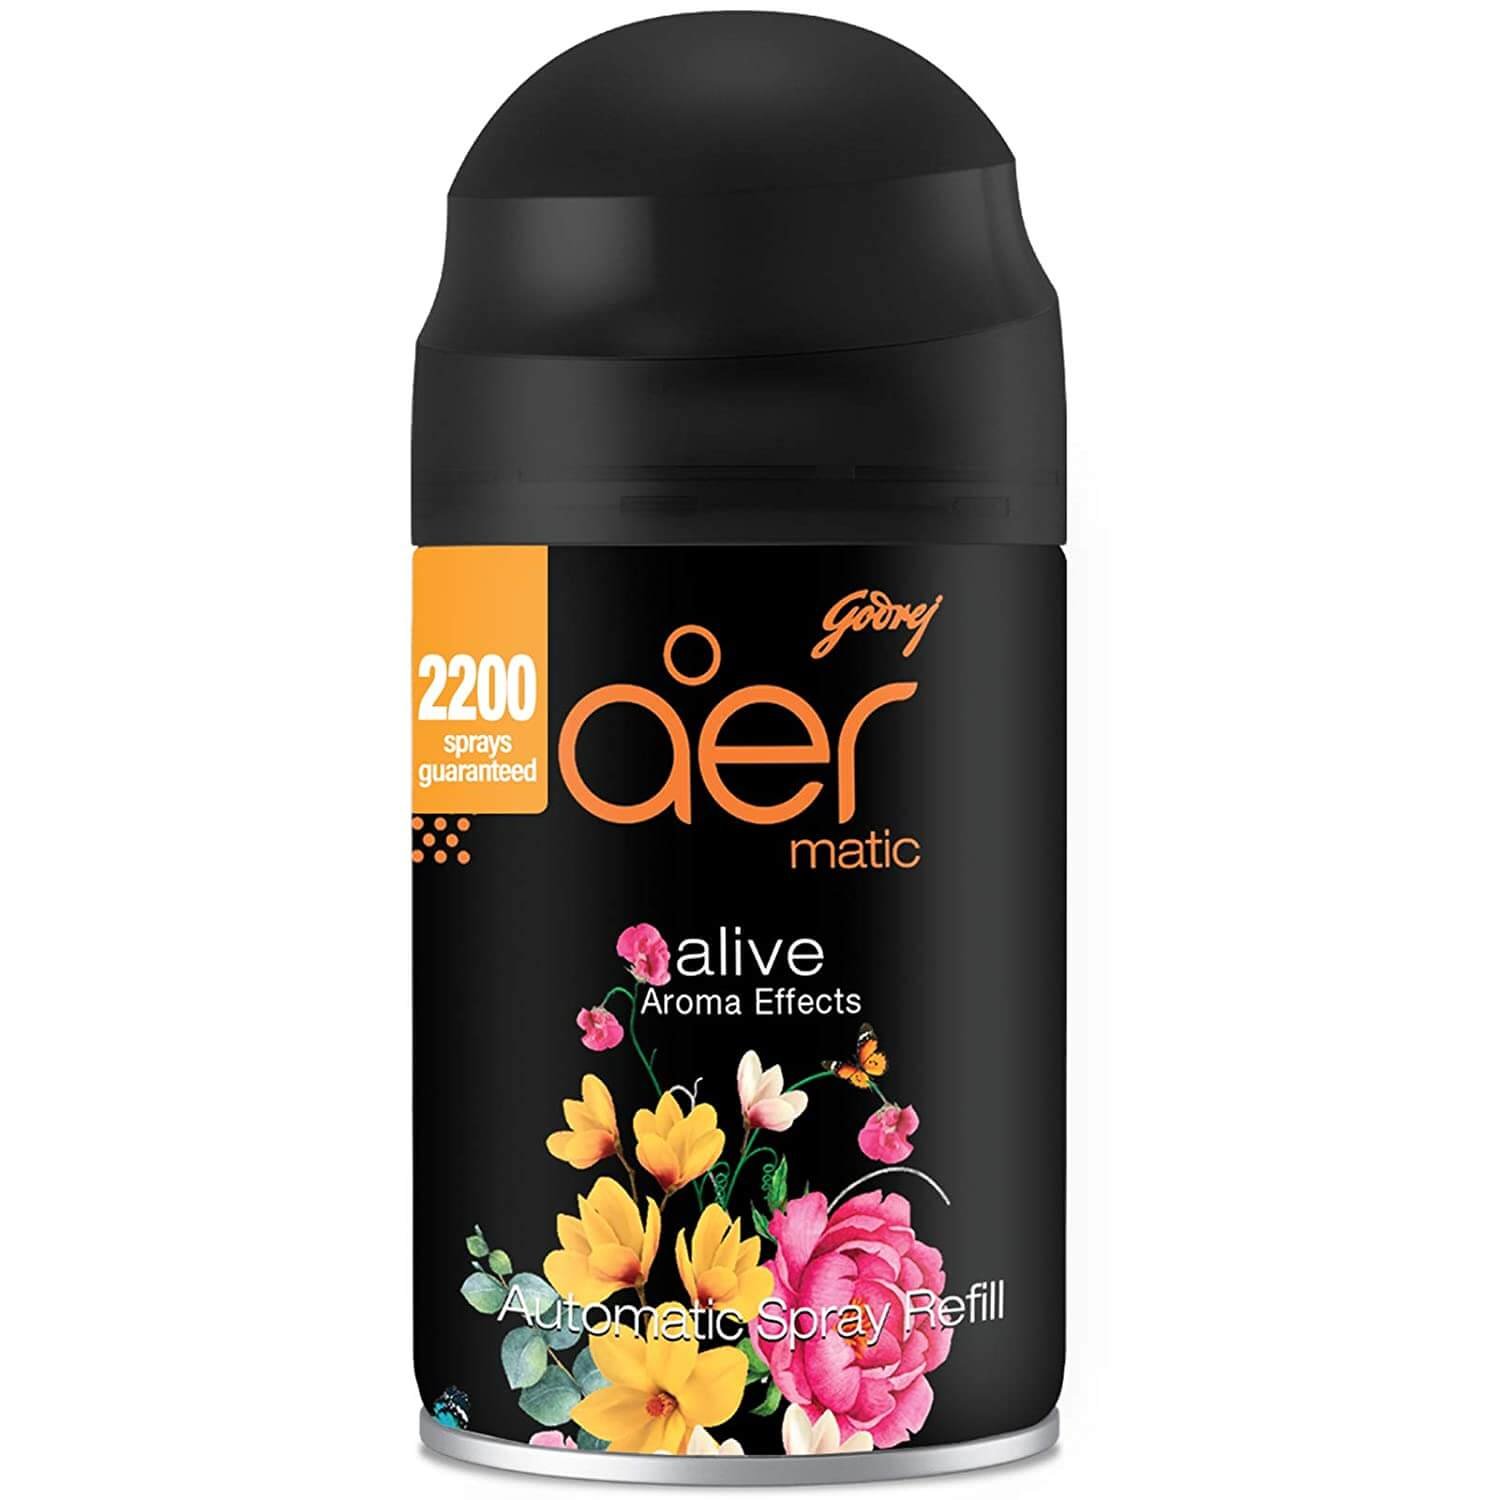 https://shoppingyatra.com/product_images/Godrej aer Smart Matic – Automatic Air Freshener Refill, Premium Fragrance - Alive (2200 sprays)1.jpg